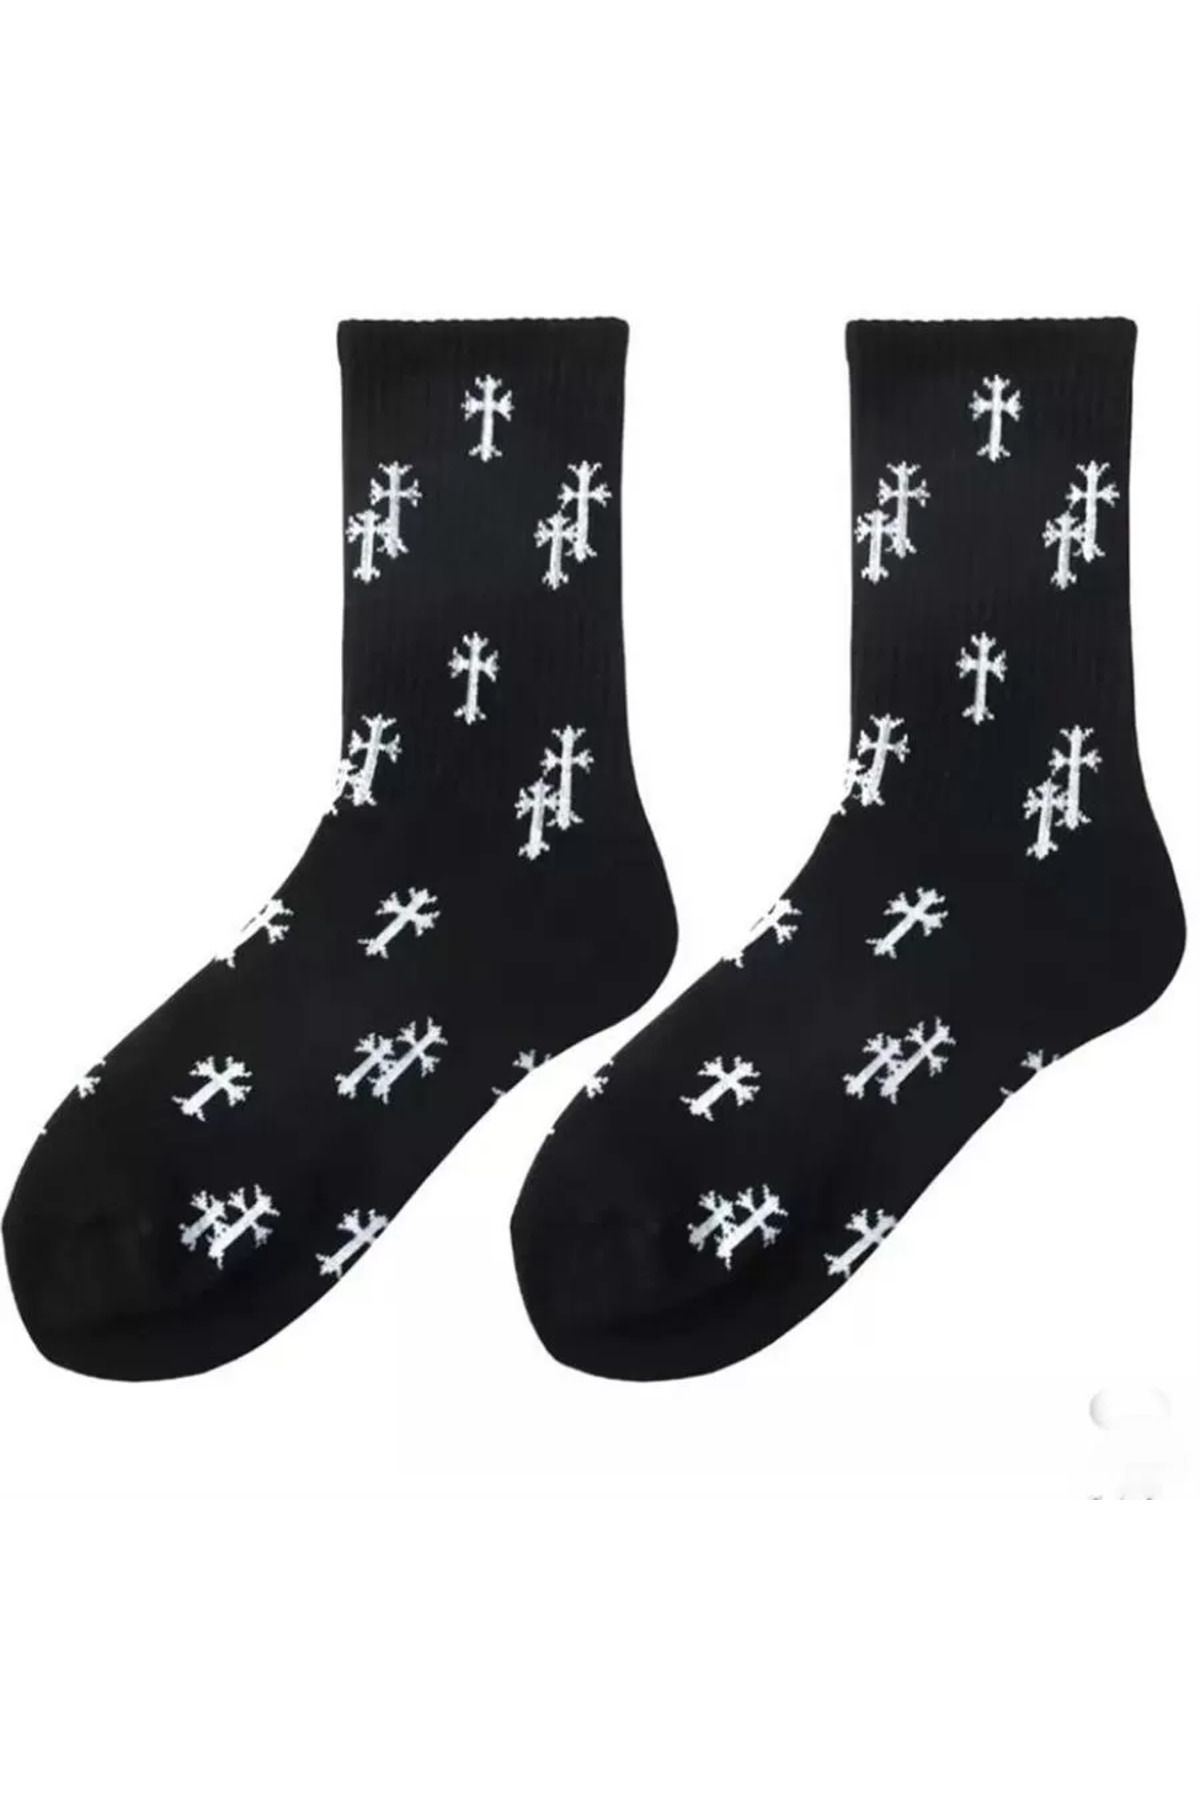 Köstebek Gothic Cross Unisex Çorap